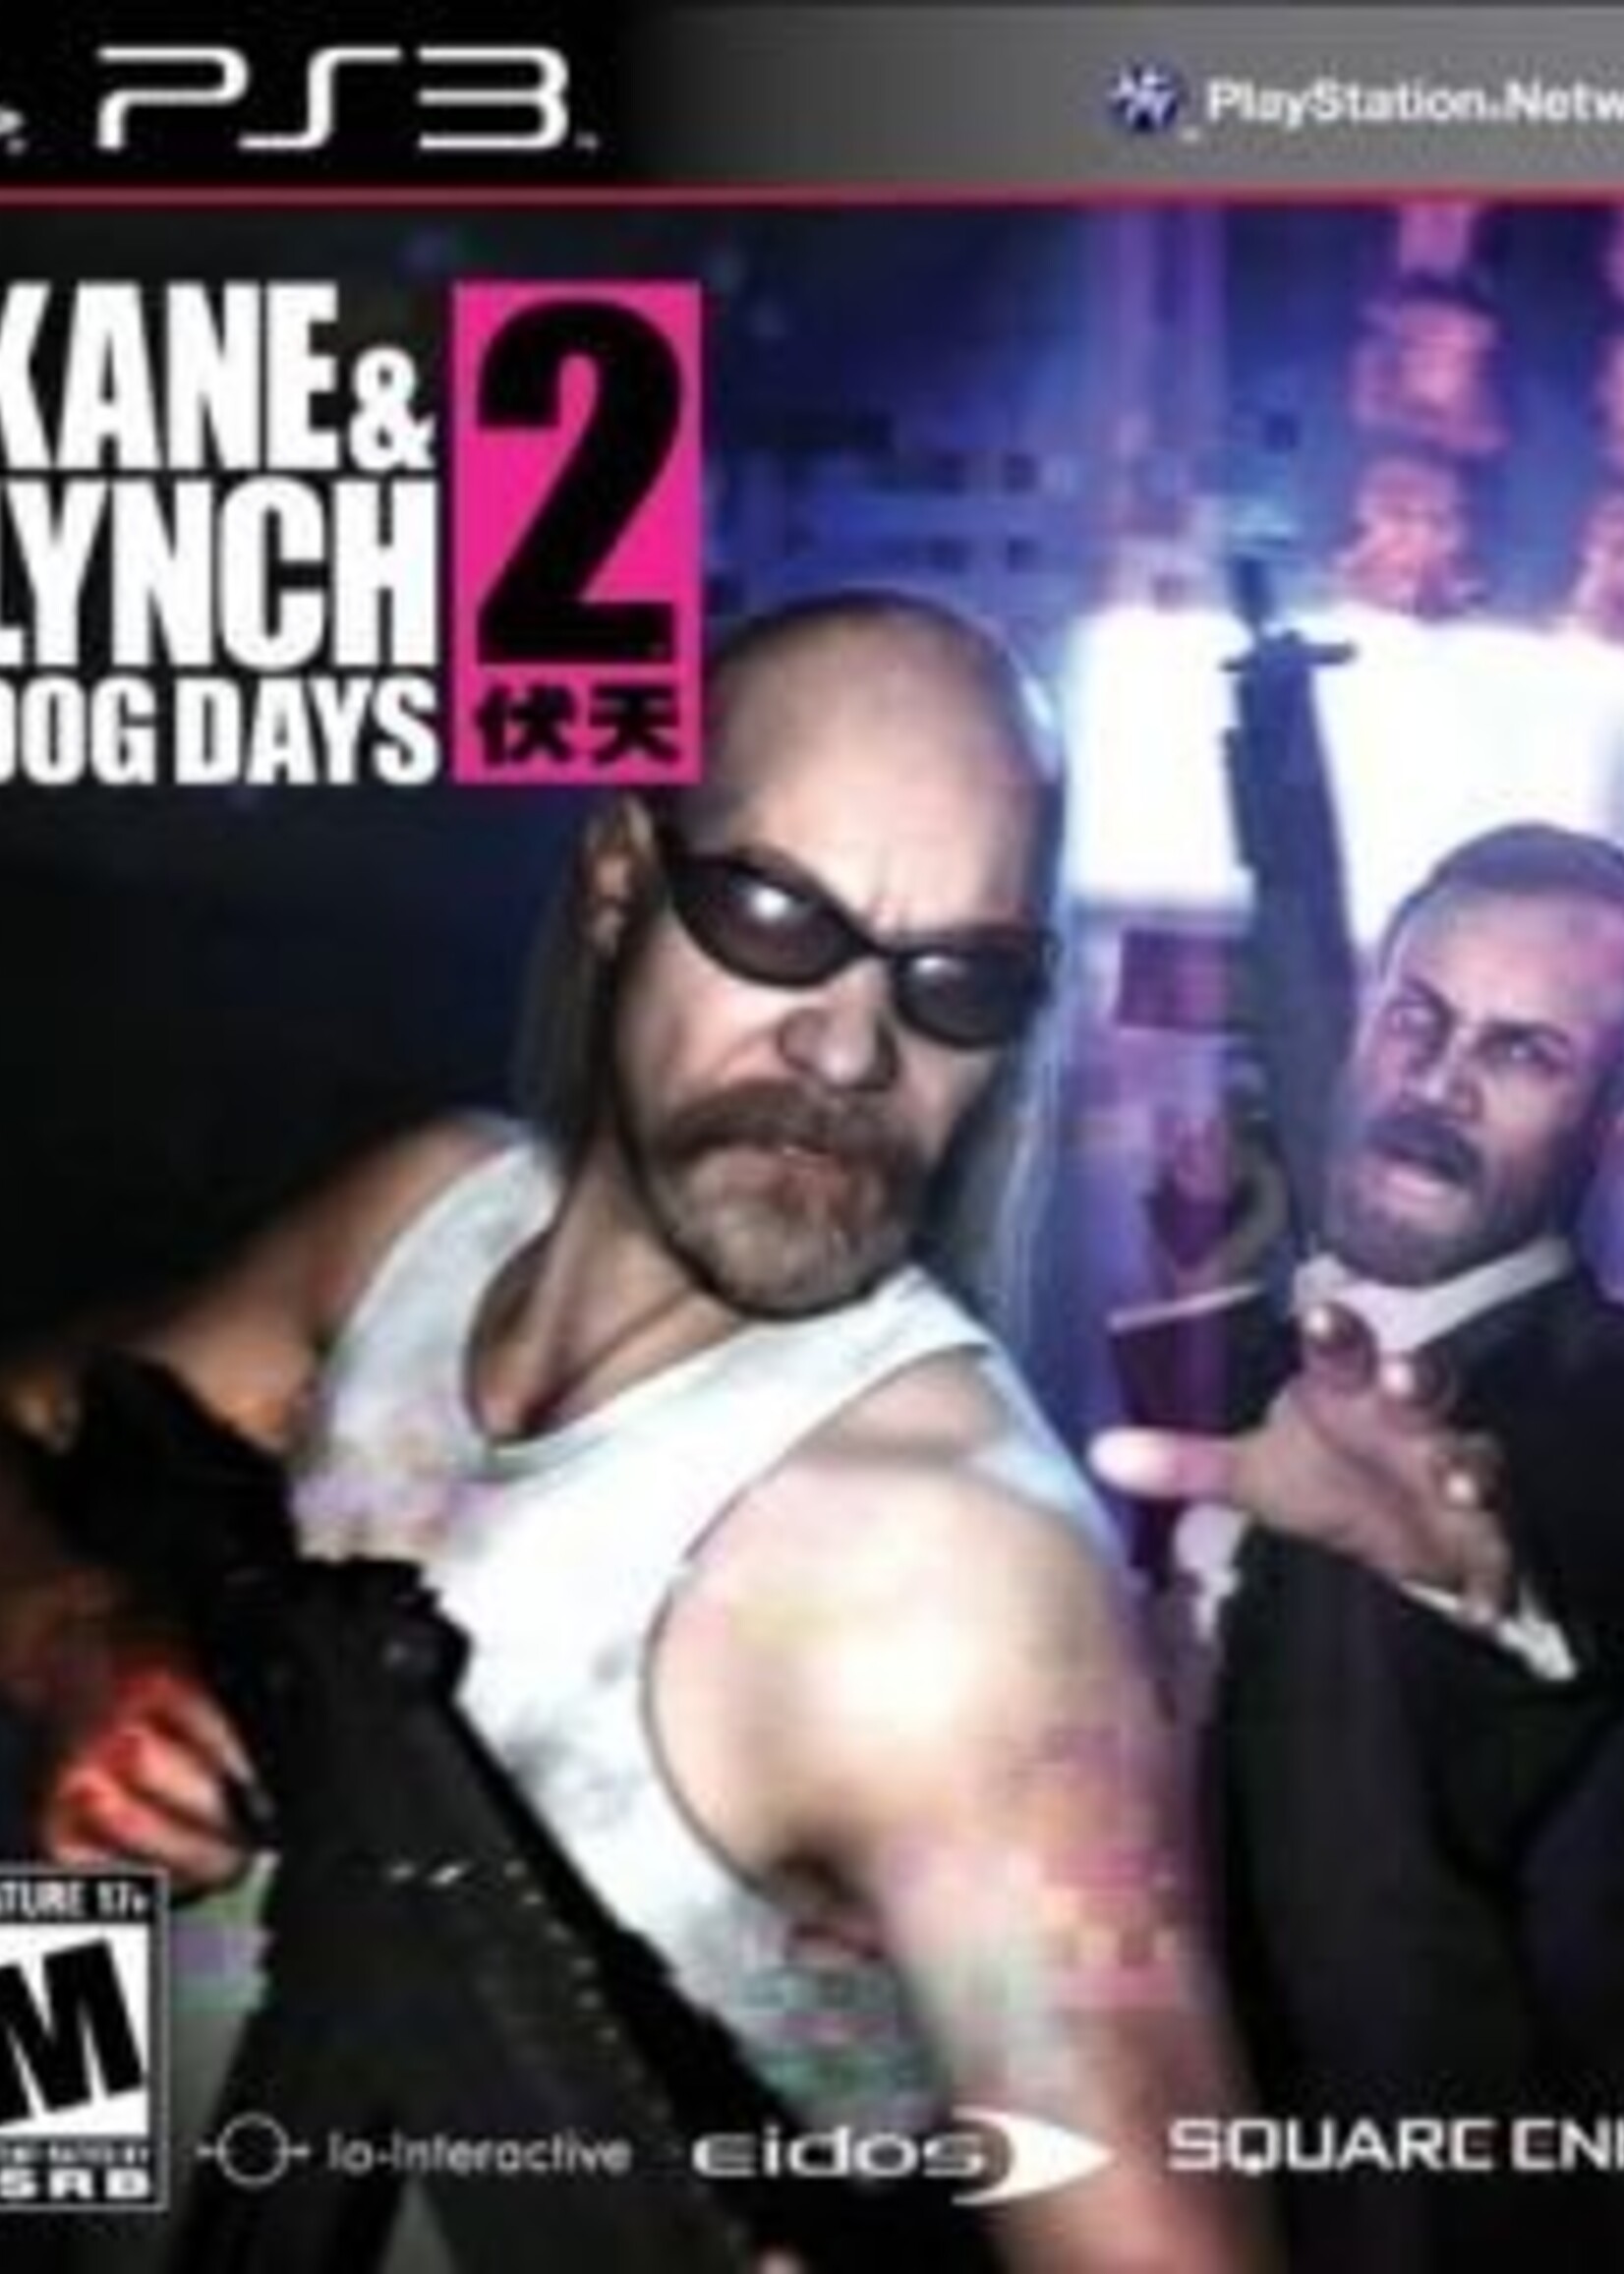 Square Enix Kane & Lynch 2 - Dog Days